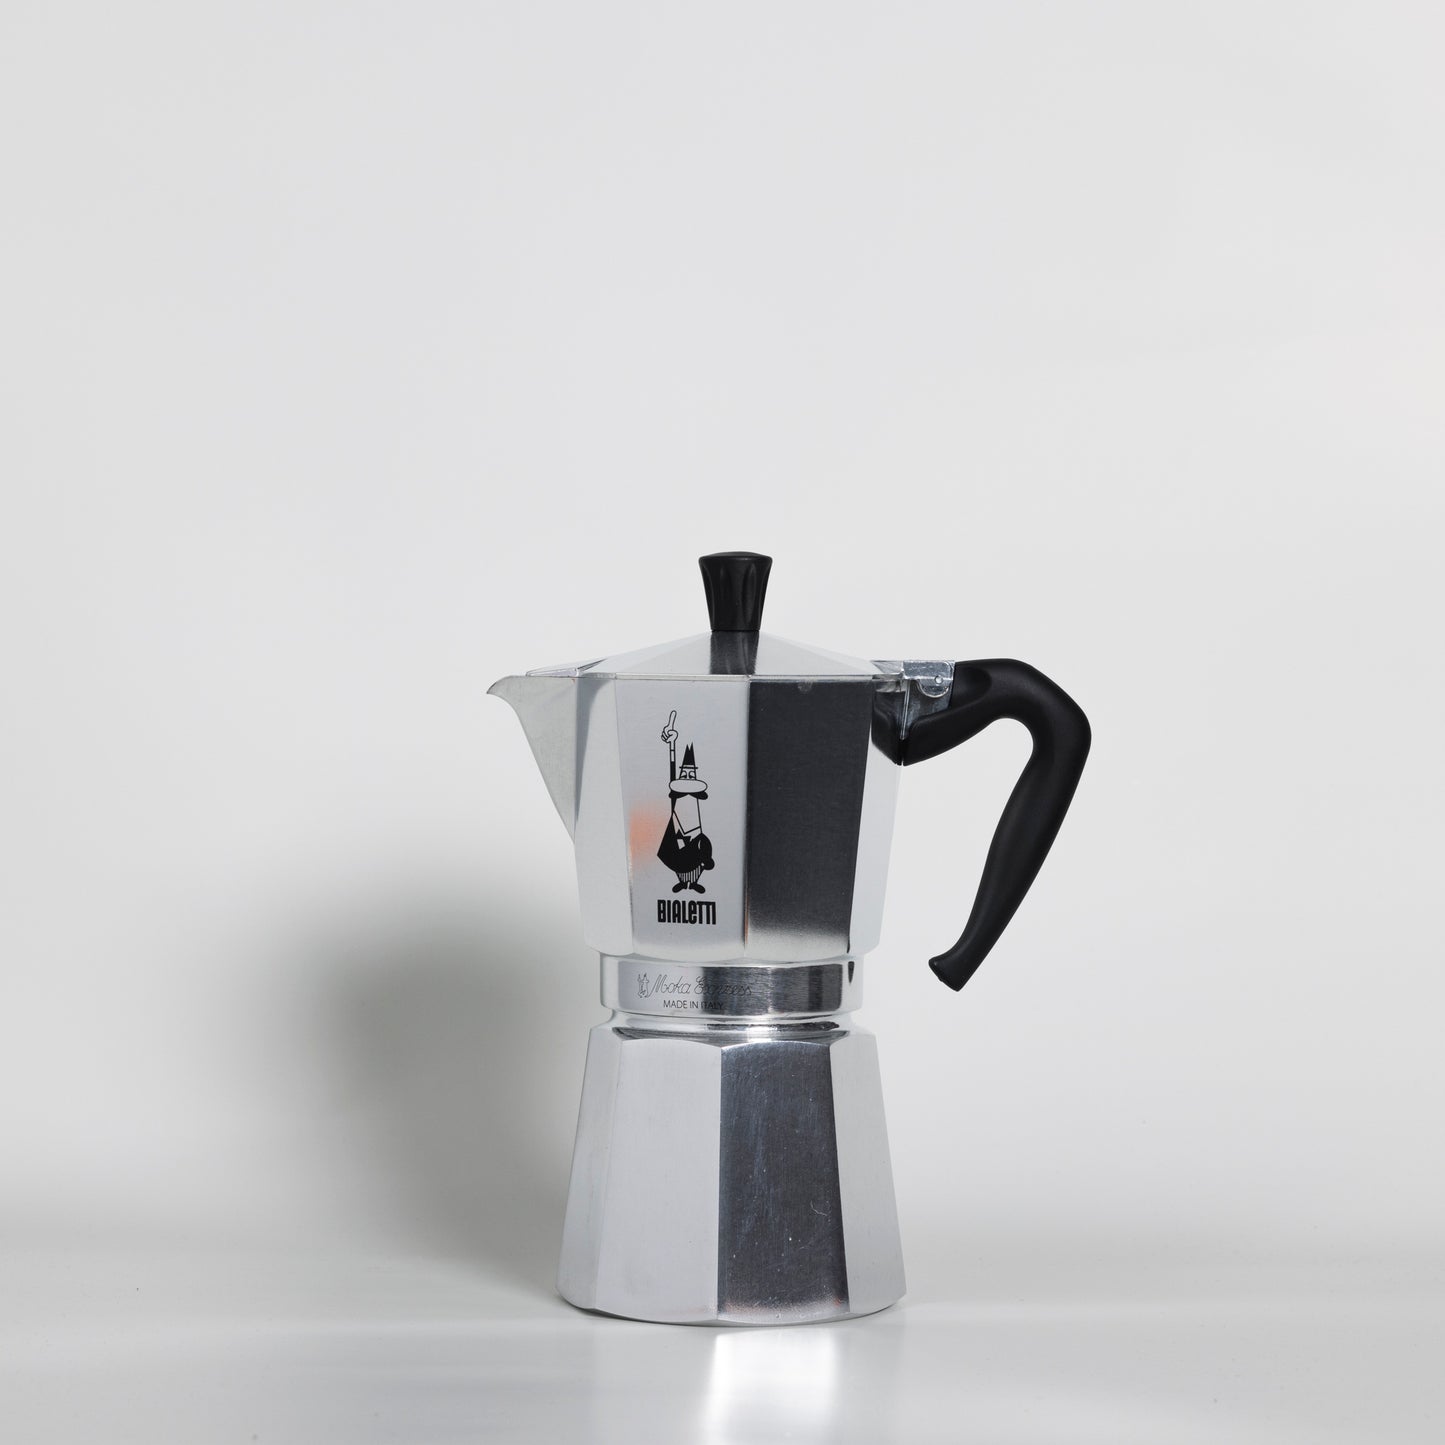 Bialetti Moka Express - Stovetop Espresso Maker - 6 Cup - Black